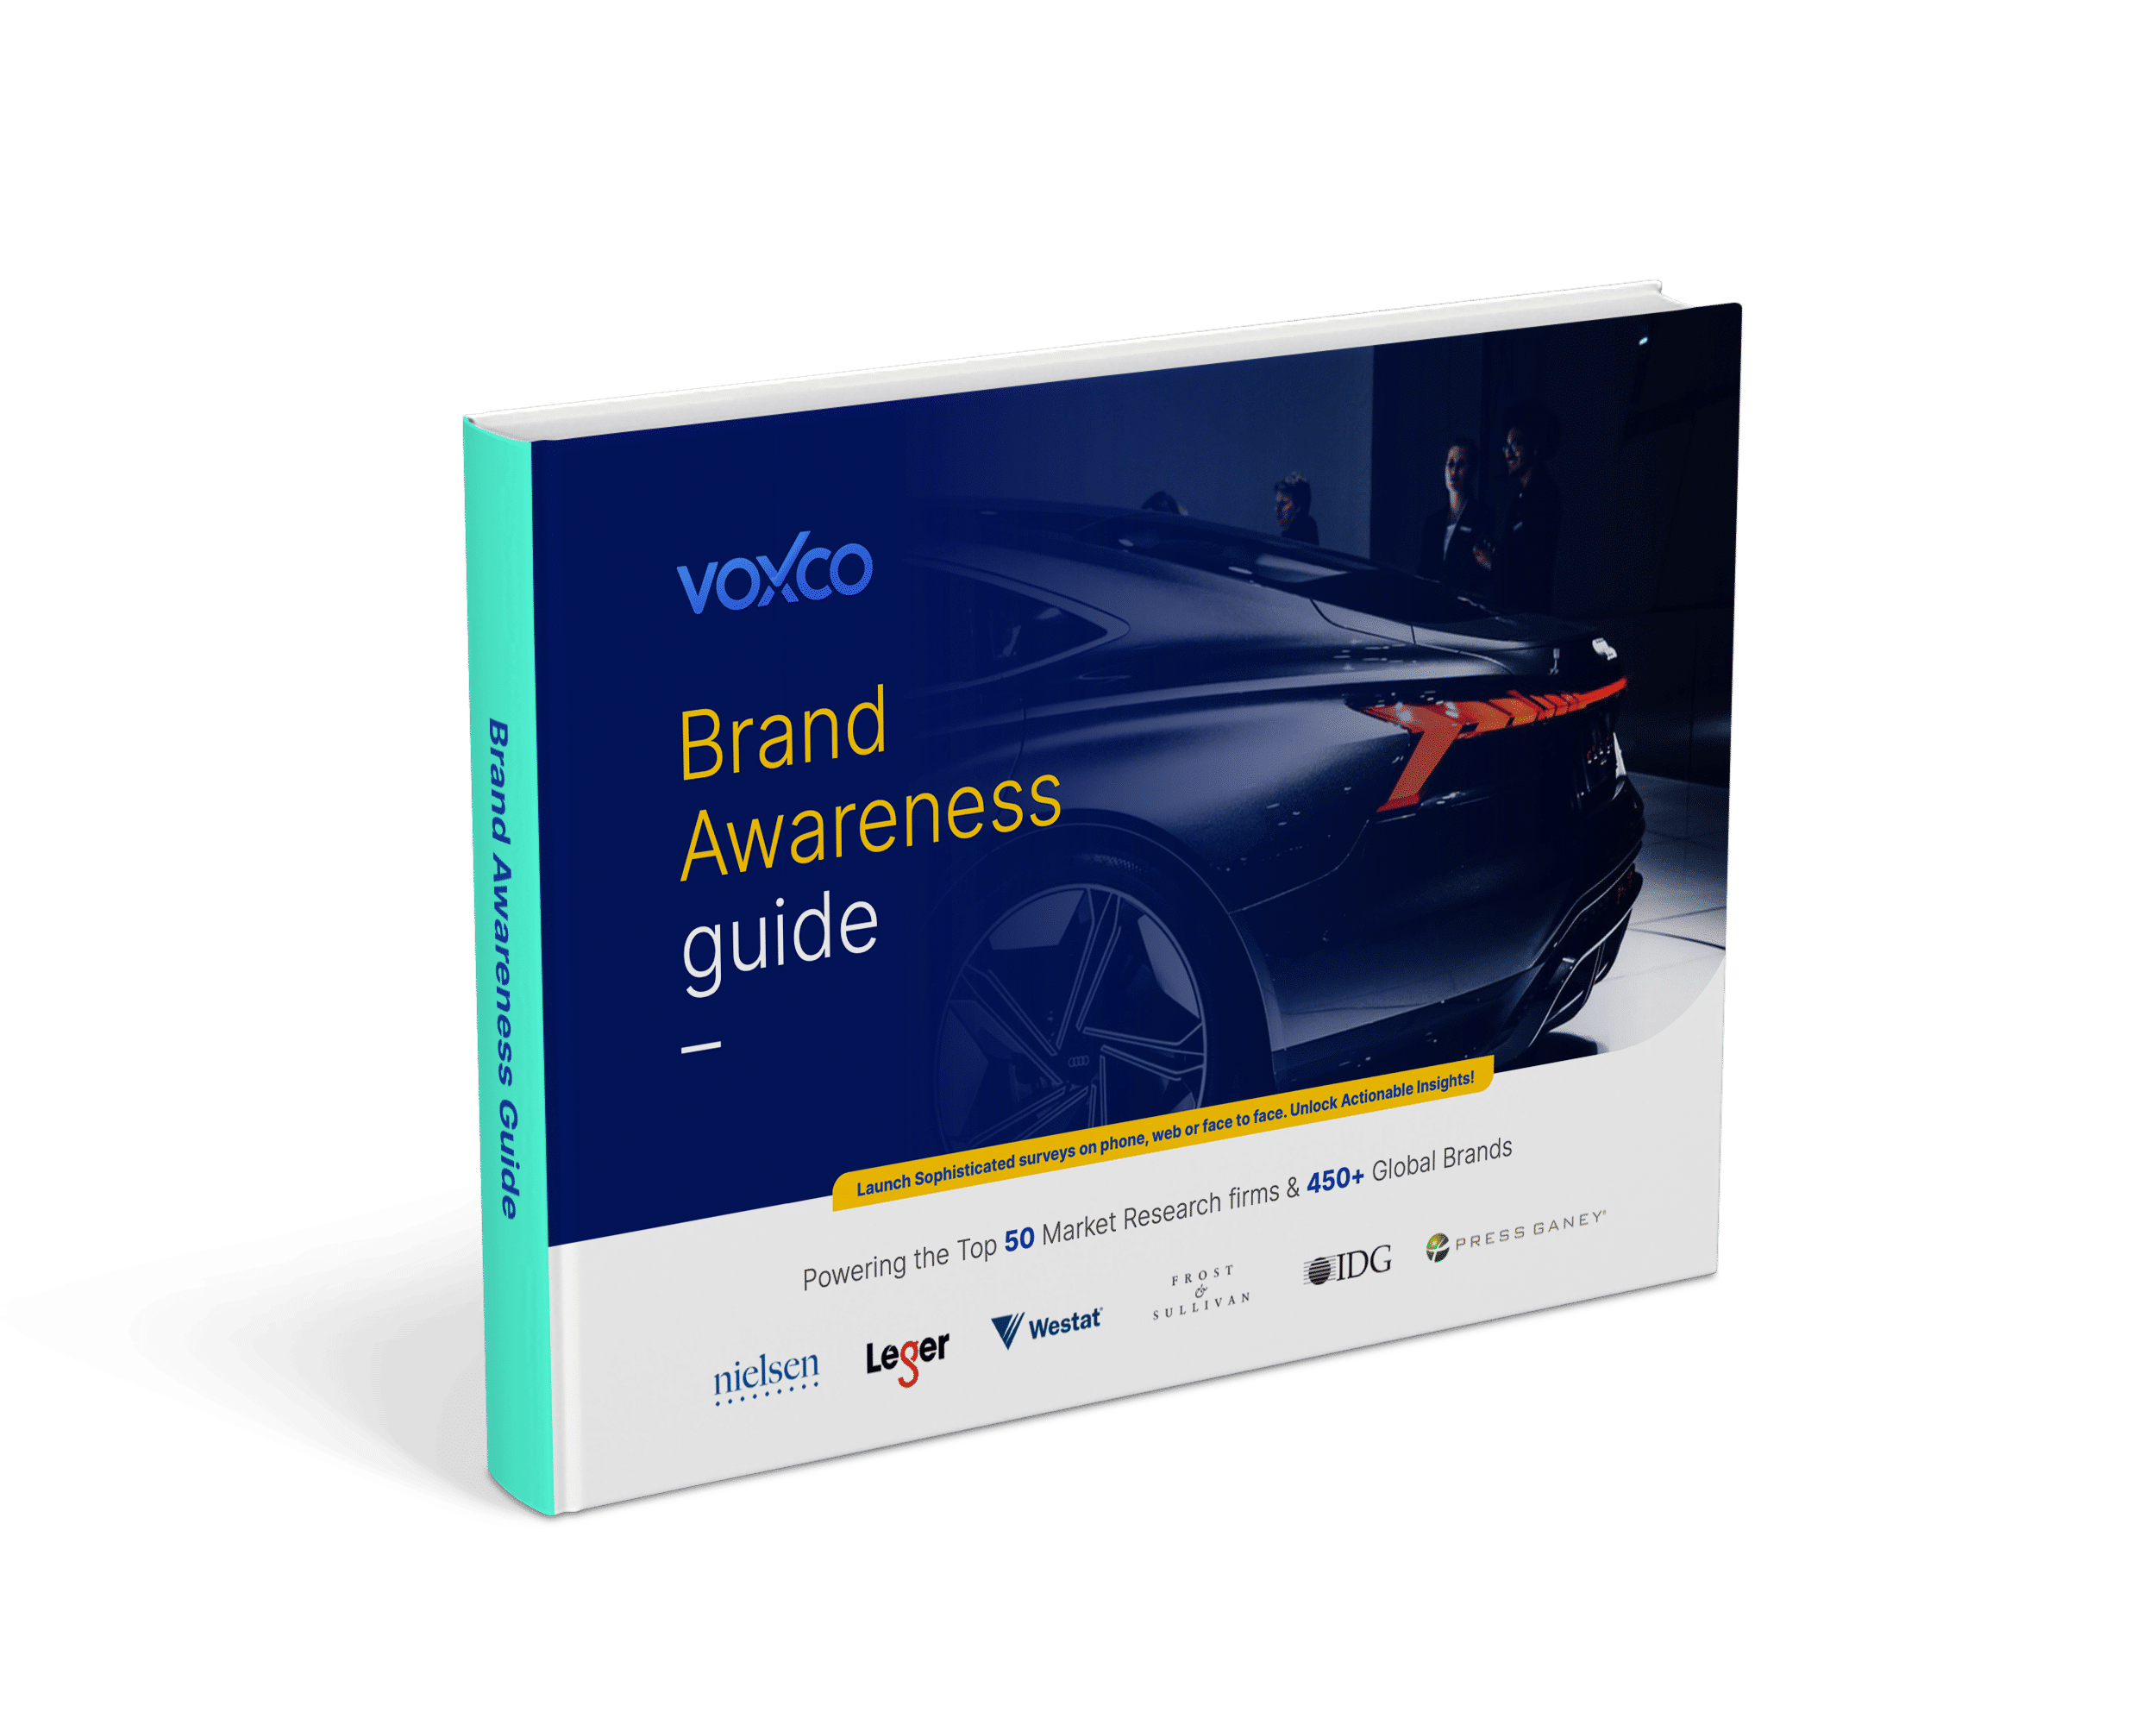 Voxco Research Cloud - Duplicate logiciel denquete